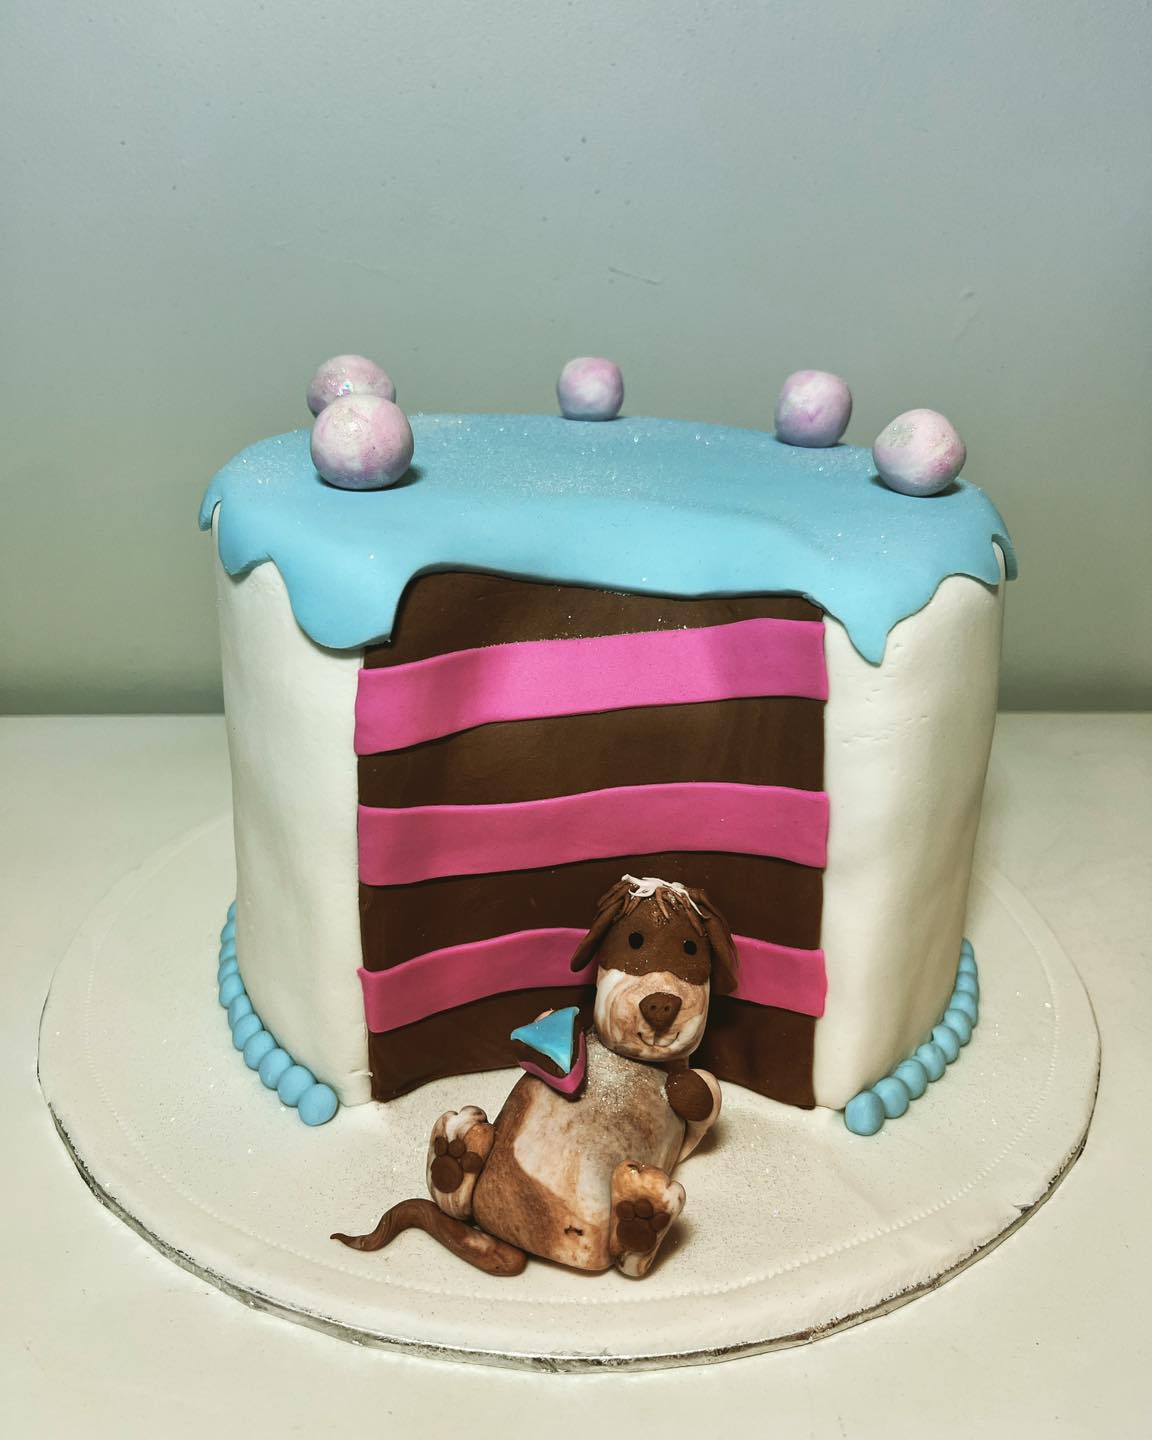 Birthday cakes, dog cake, cape town cakes, novelty cakes, birthday cakes, southern peninsula, cakes